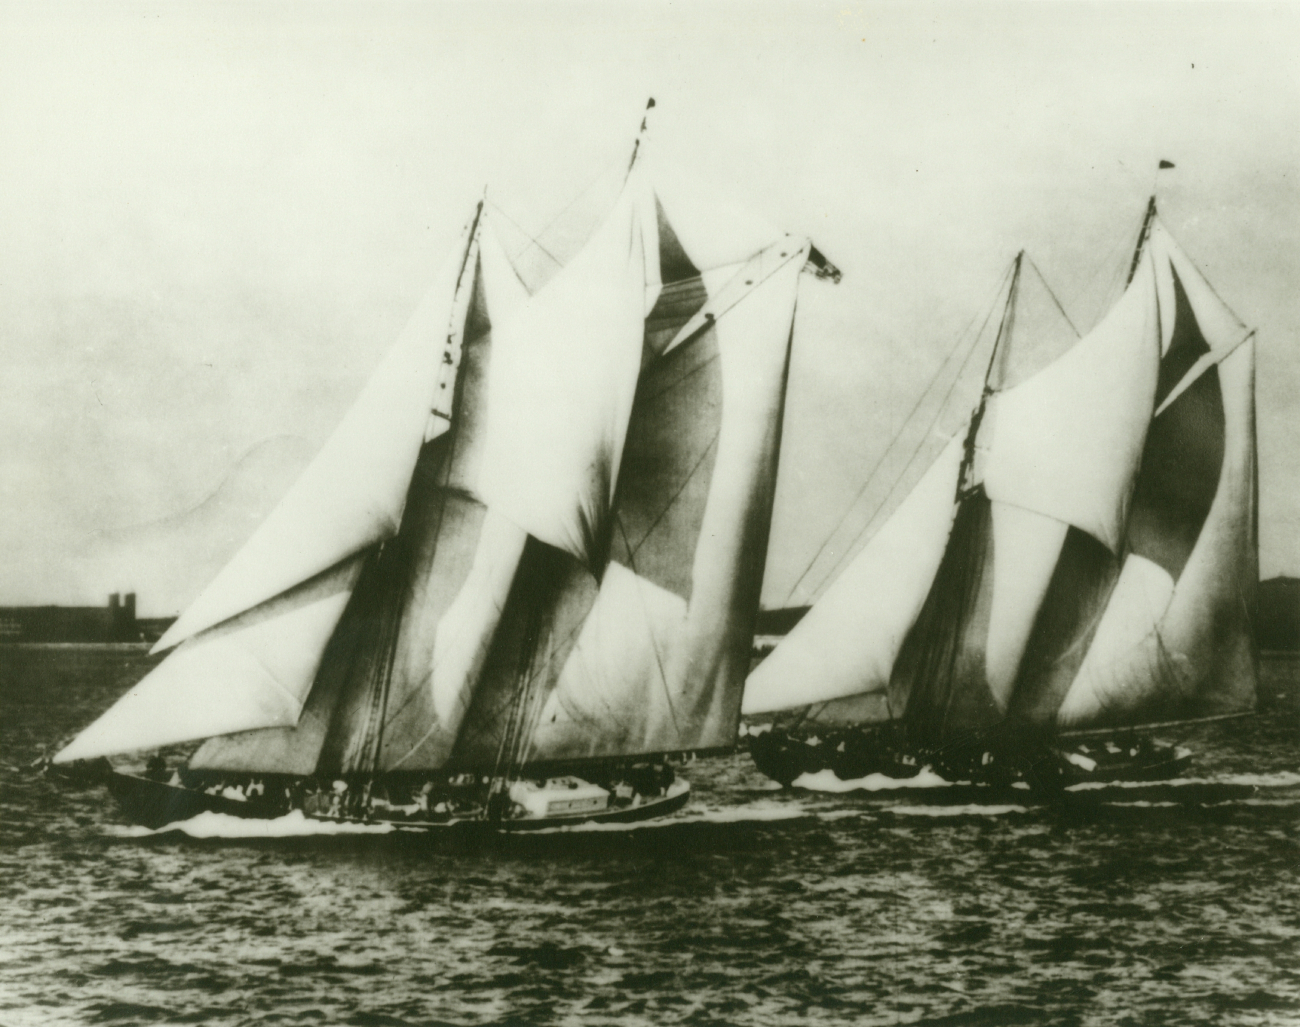 Beautiful racing schooners carrying all sail